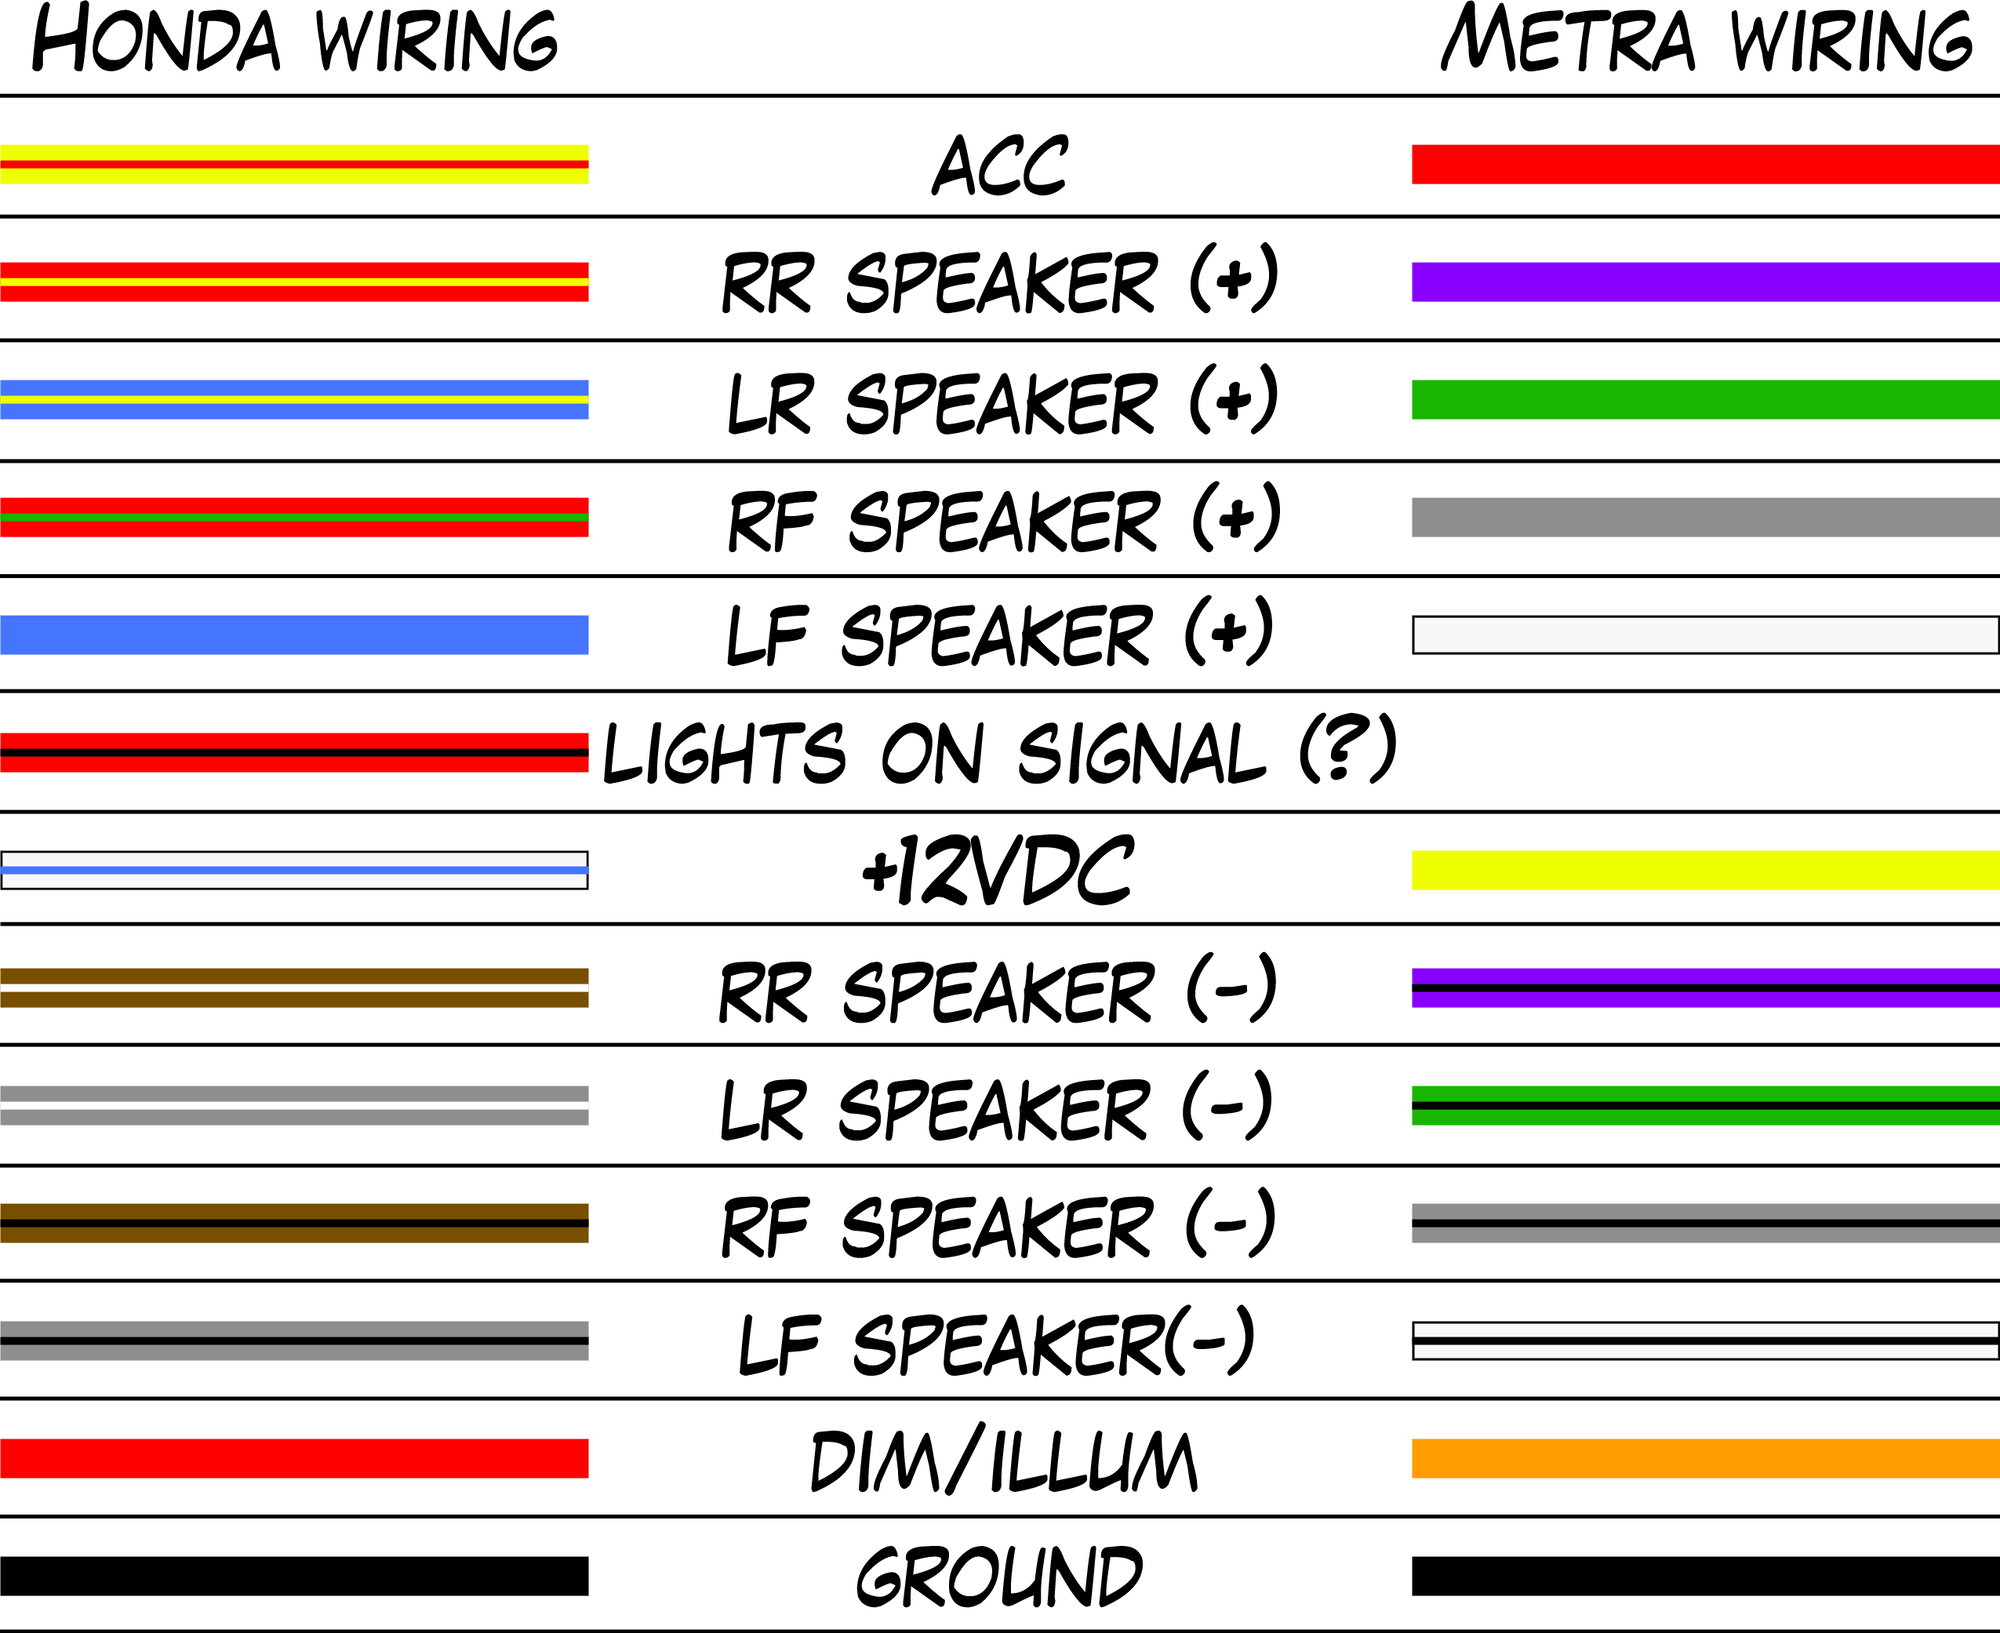 2004 Honda Civic Radio Wiring Diagram Collection Wiring Diagram Sample